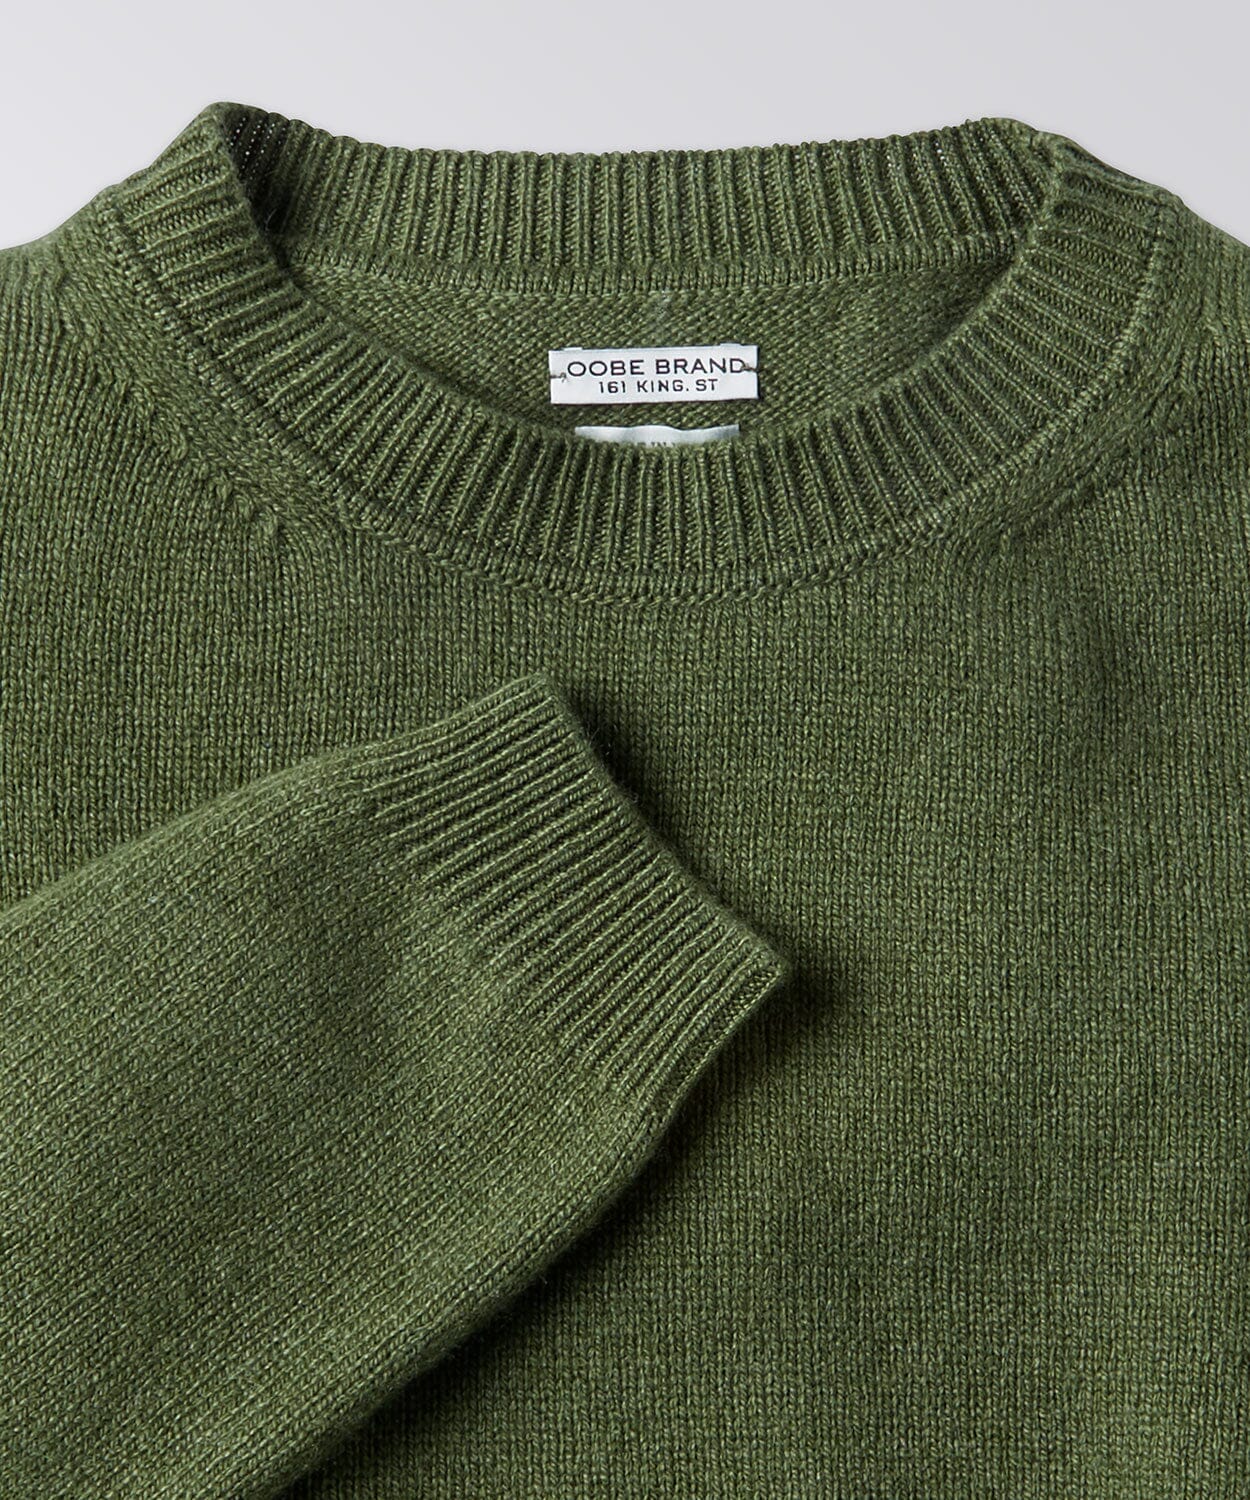 Samson Sweater